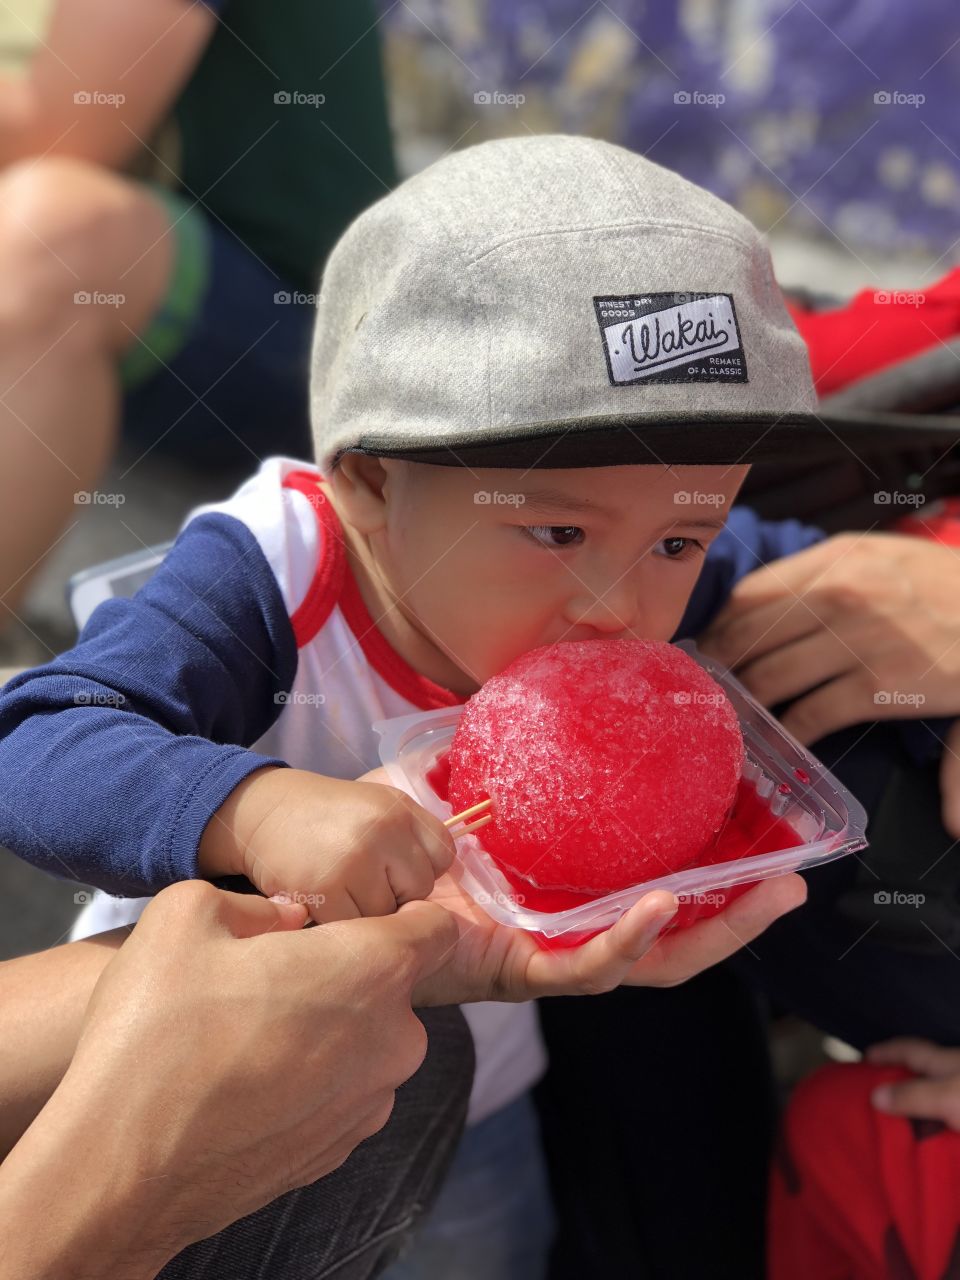 Baby Boy eating Ice Ball